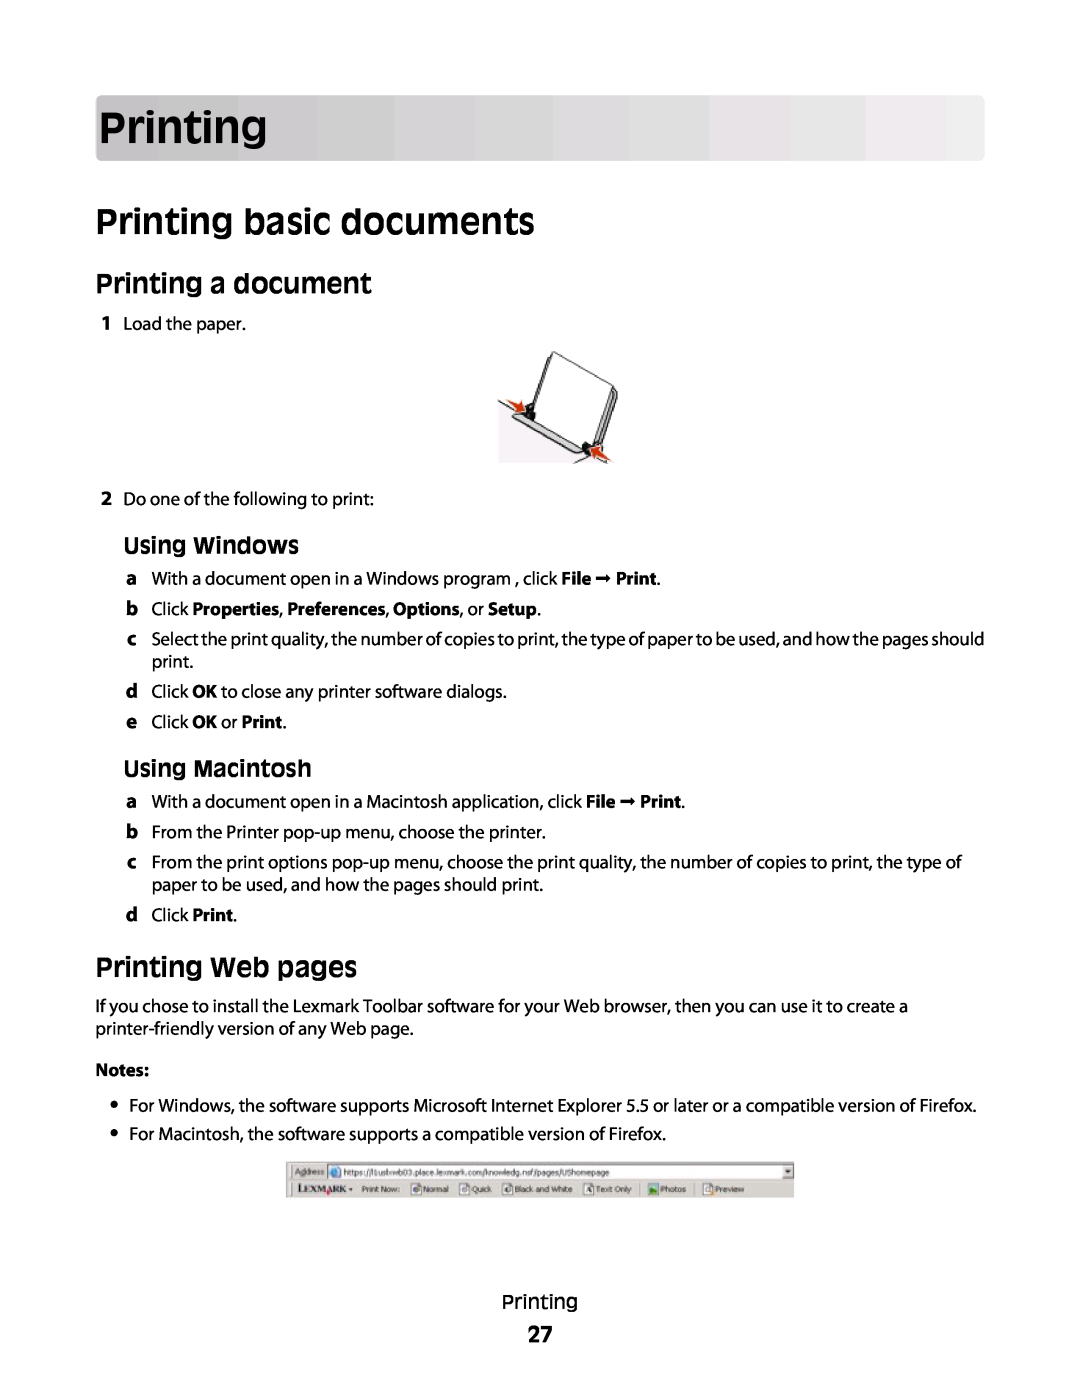 Lexmark 4445, 4433 Printing basic documents, Printing a document, Printing Web pages, Using Windows, Using Macintosh 